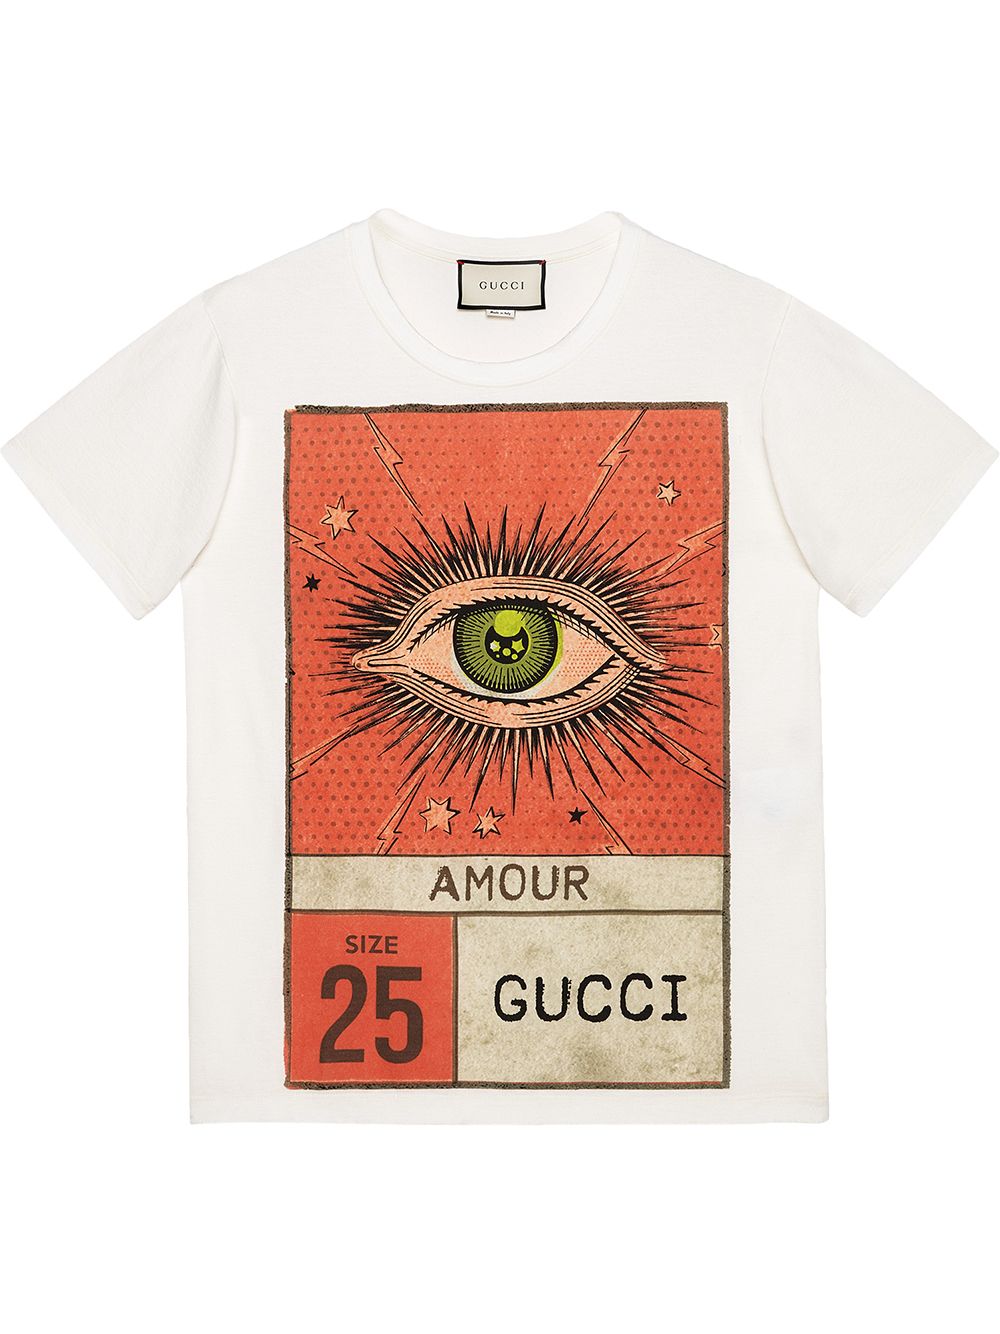 Gucci Amour eye print T-shirt $490 